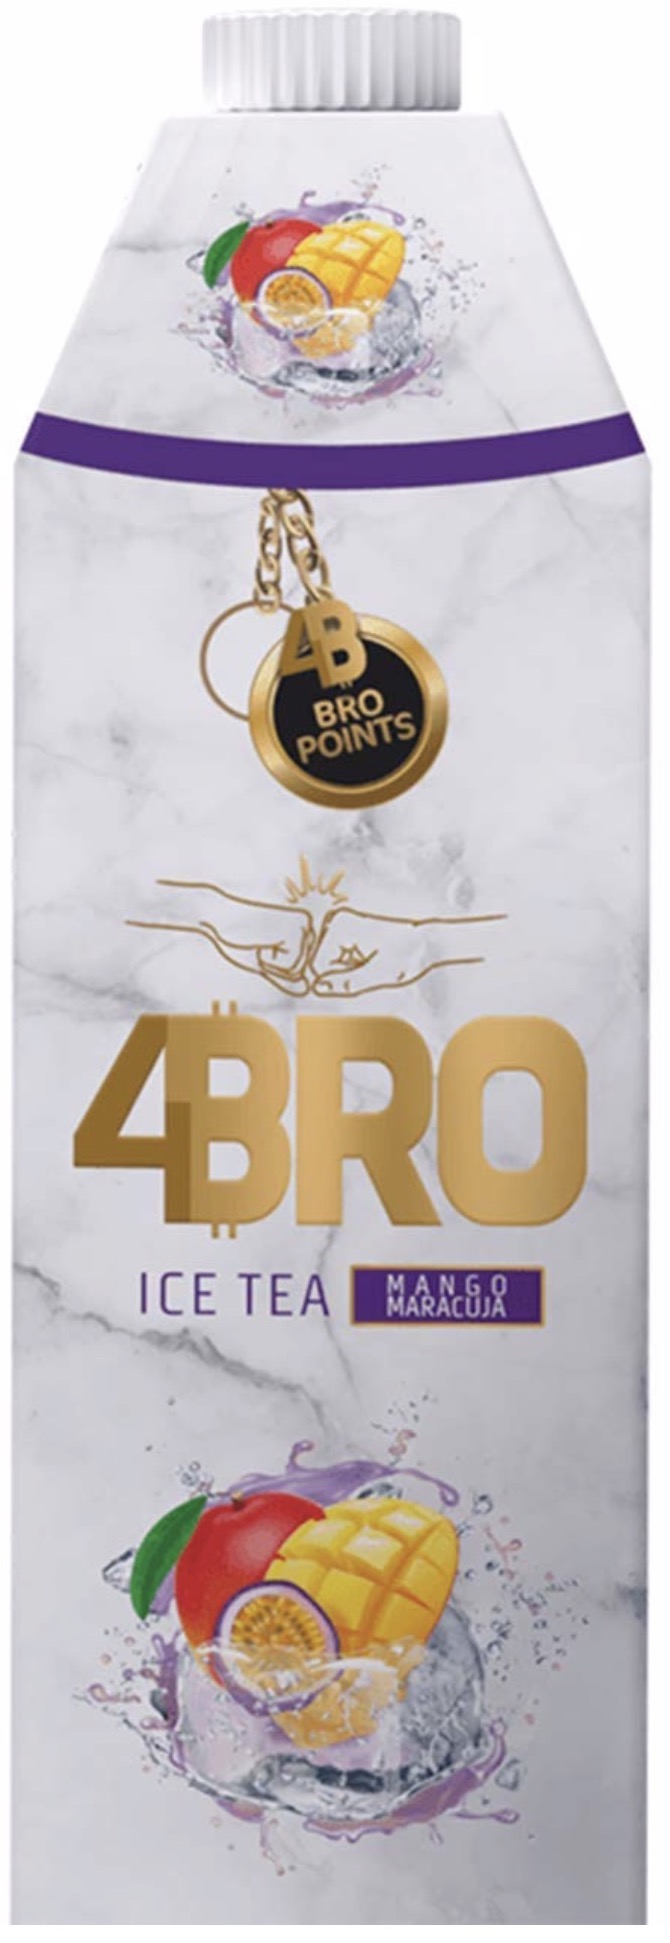 4Bro - Ice Tea Mago-Maracuja 1,0L